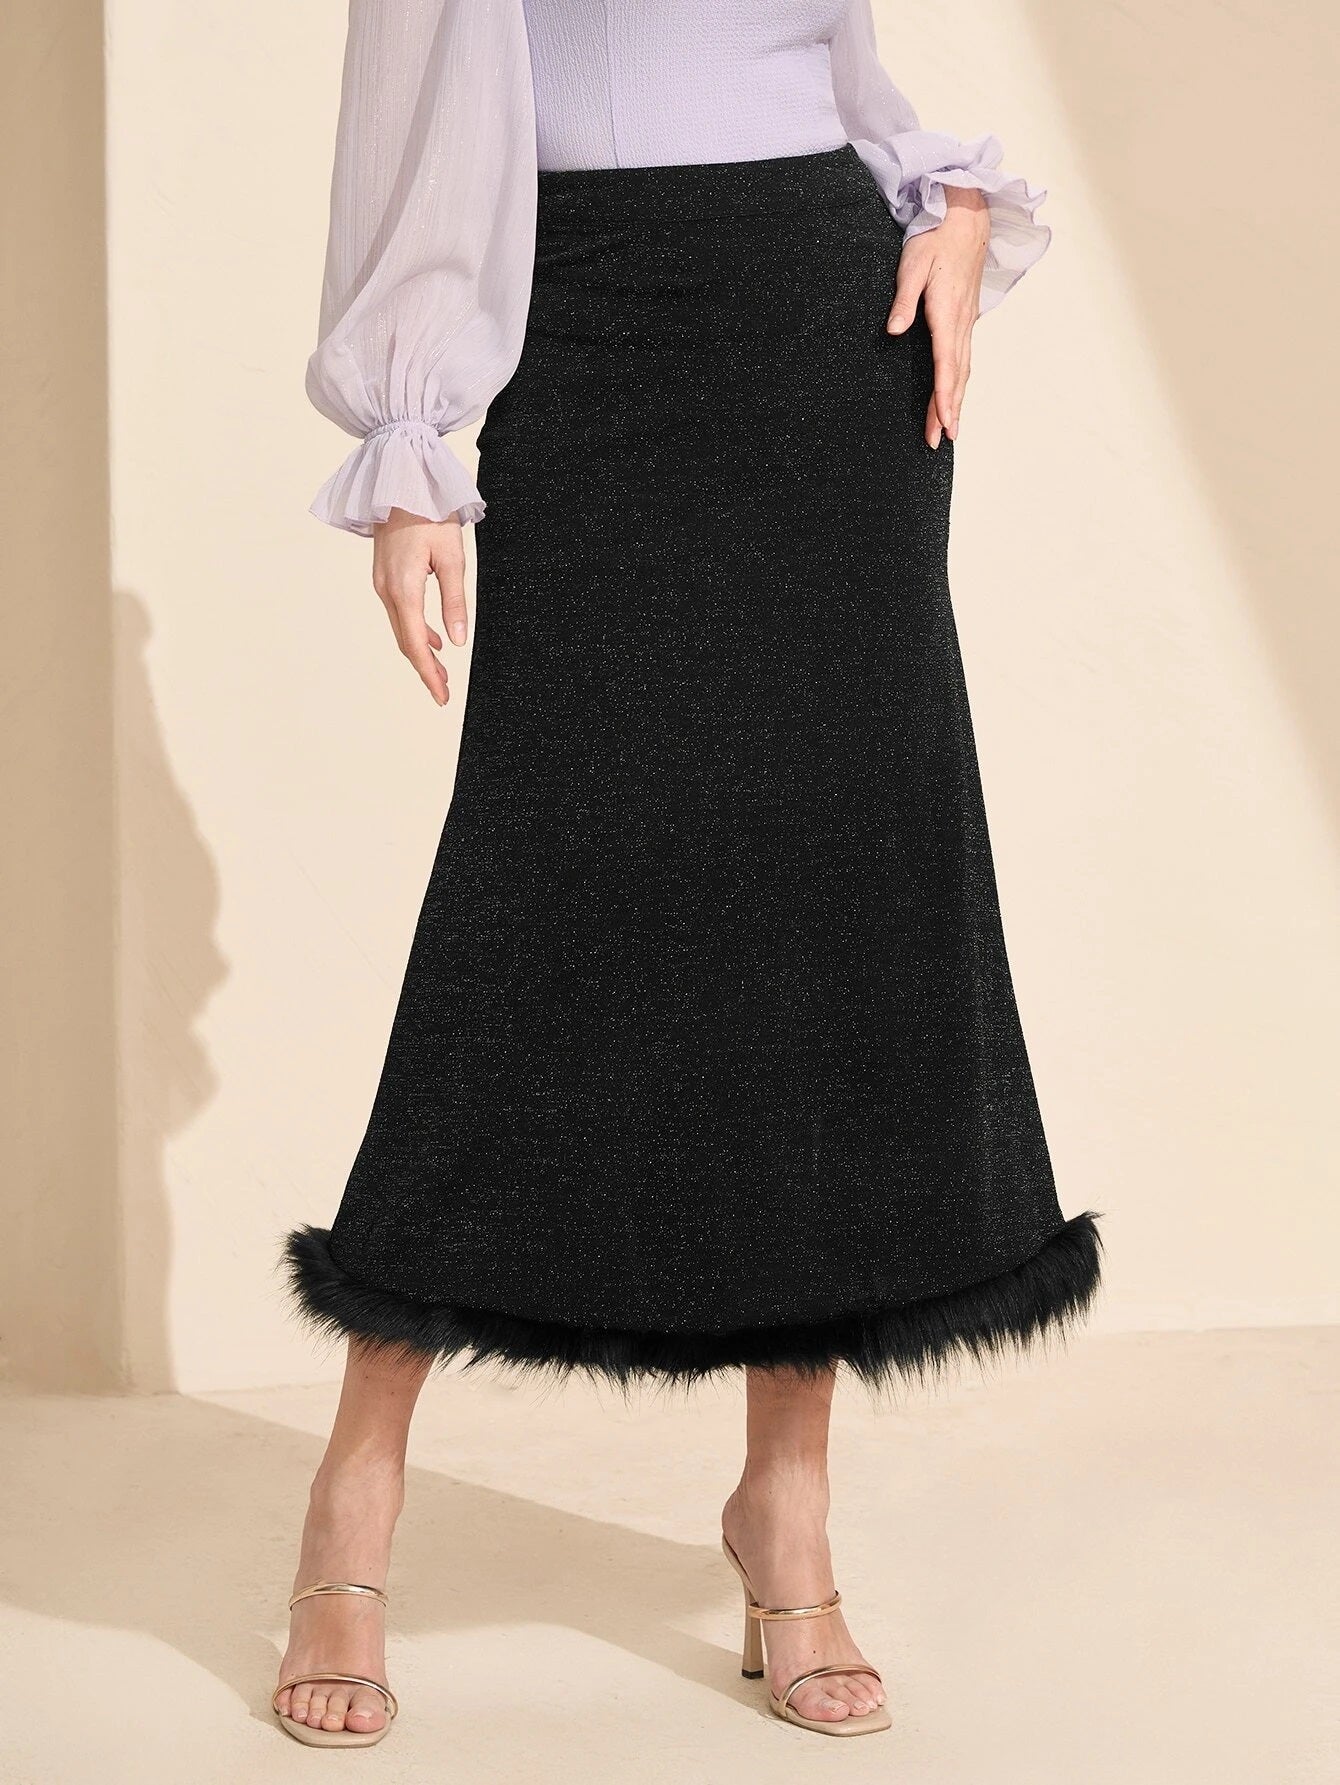 CM-BS610801 Women Casual Seoul Style High Waist Fuzzy Hem Glitter Skirt - Black